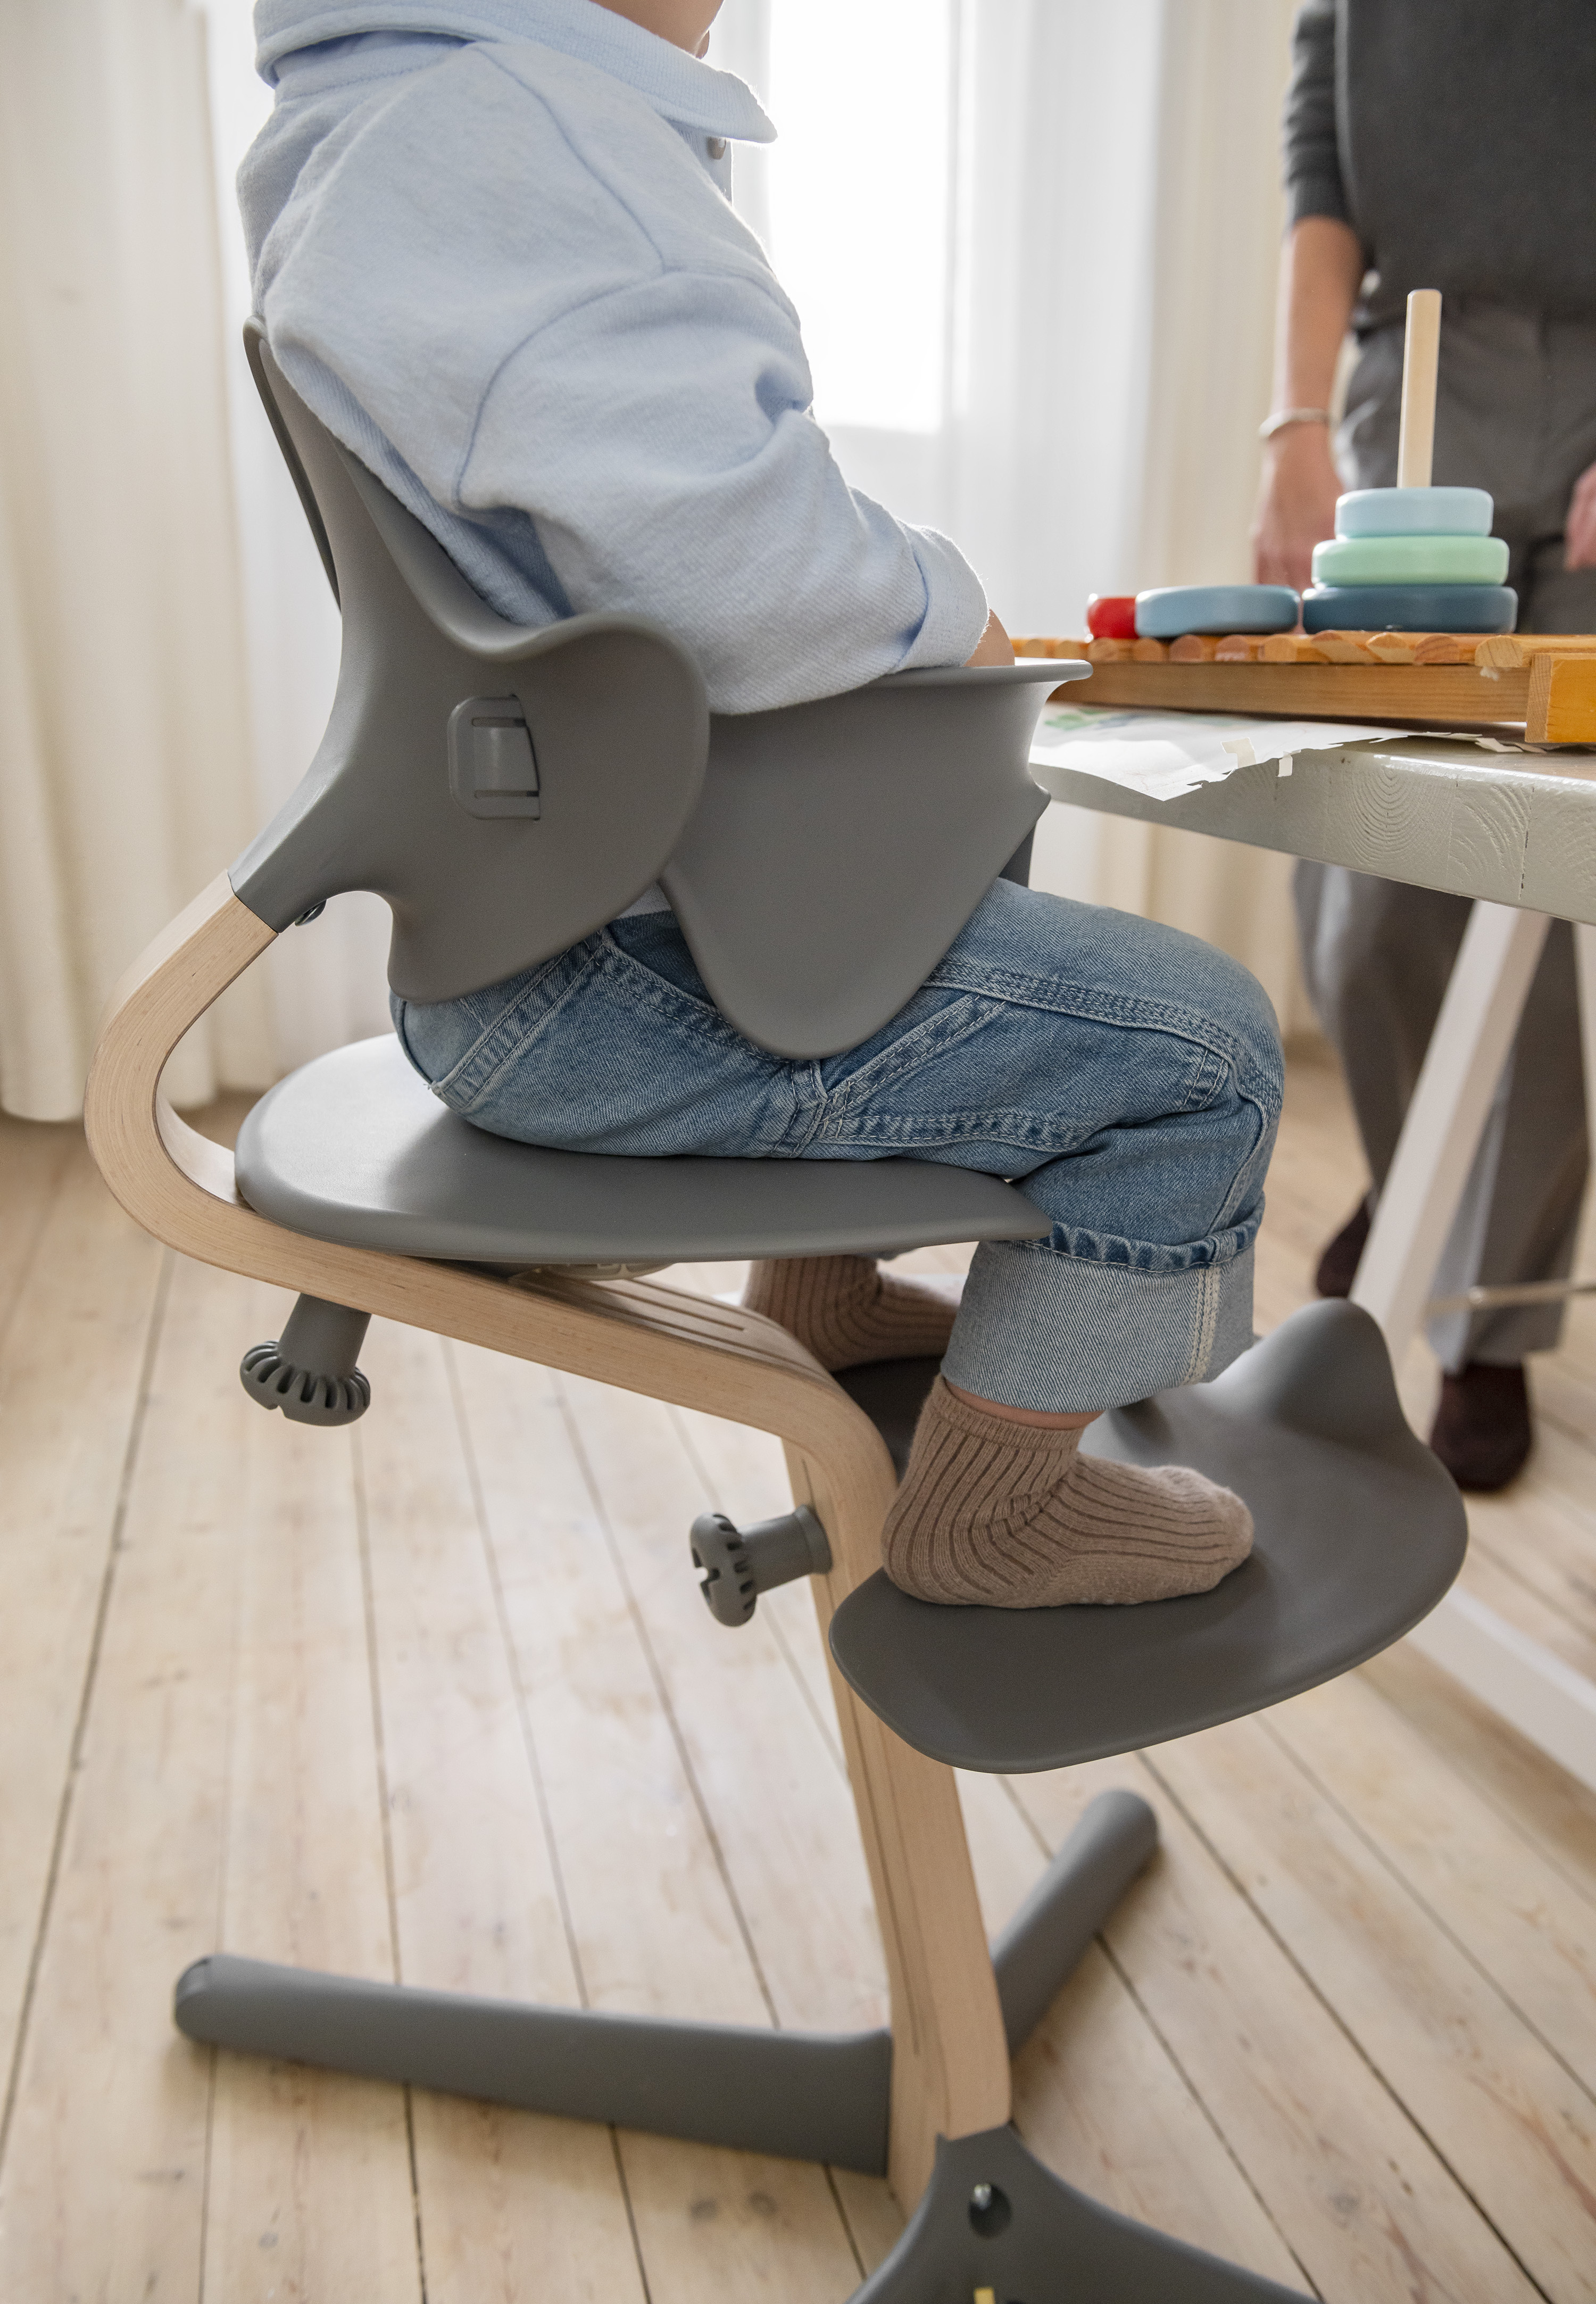 Nomi嬰兒餐椅-Nomi High chair-Stokke High chair